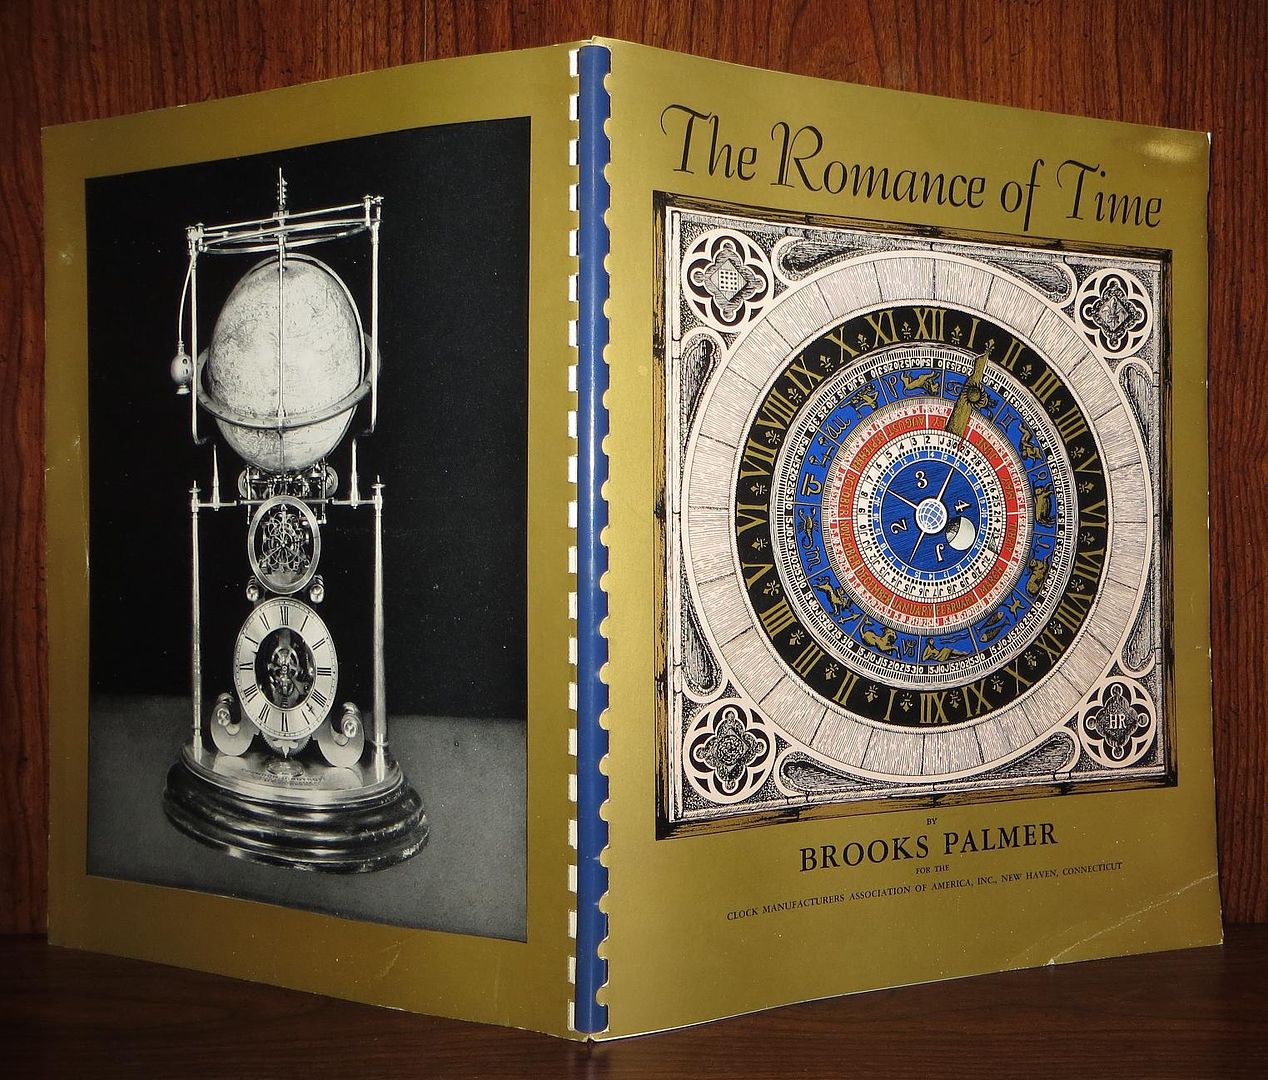 PALMER, BROOKS - The Romance of Time